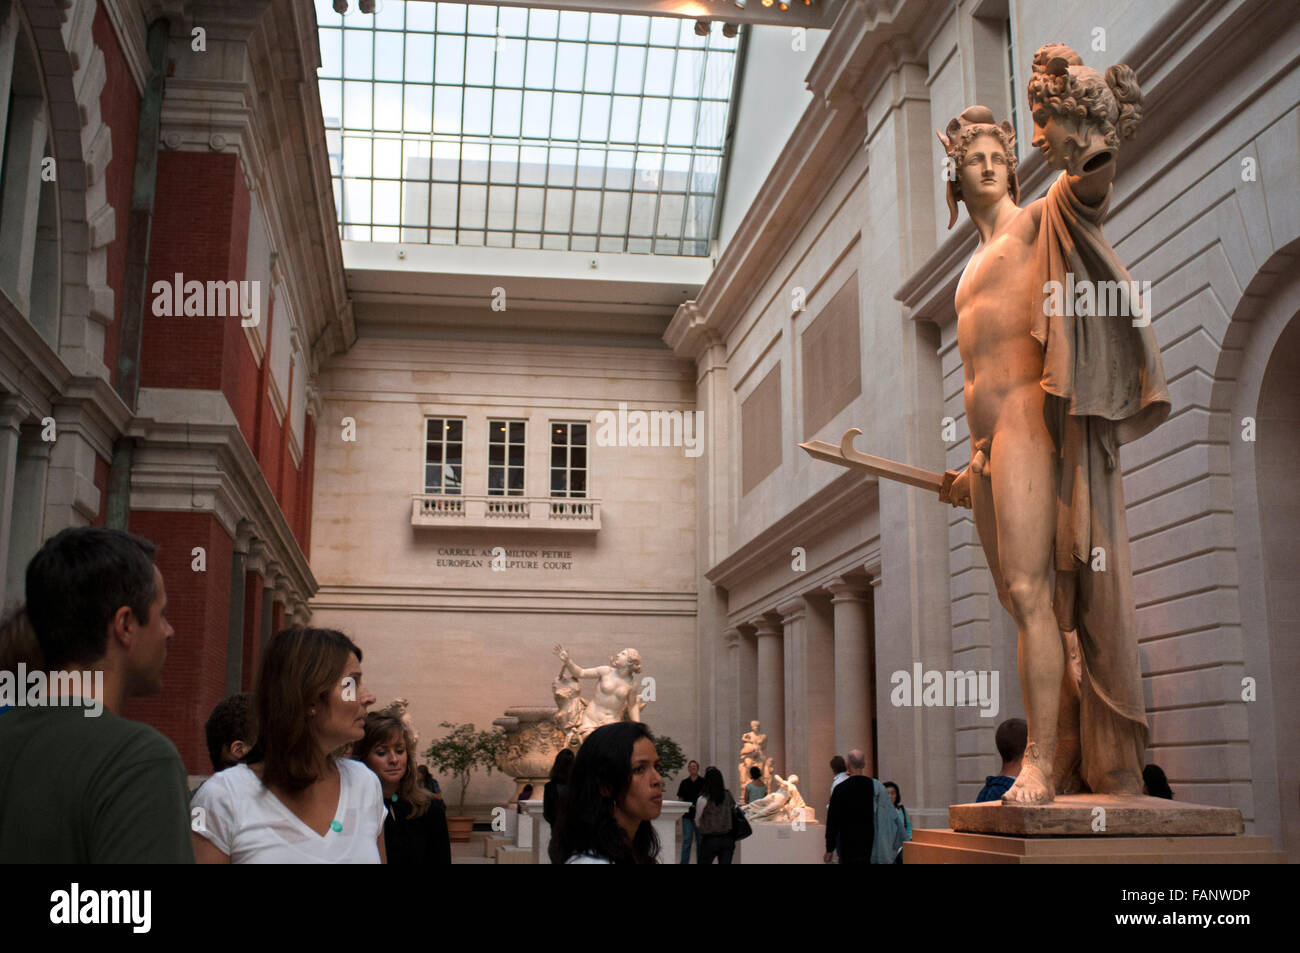 Metropolitan Museum of Art di New York, Stati Uniti d'America. Arte Greca e Romana galleria, collezione del museo di arte greca e romana comprende Foto Stock